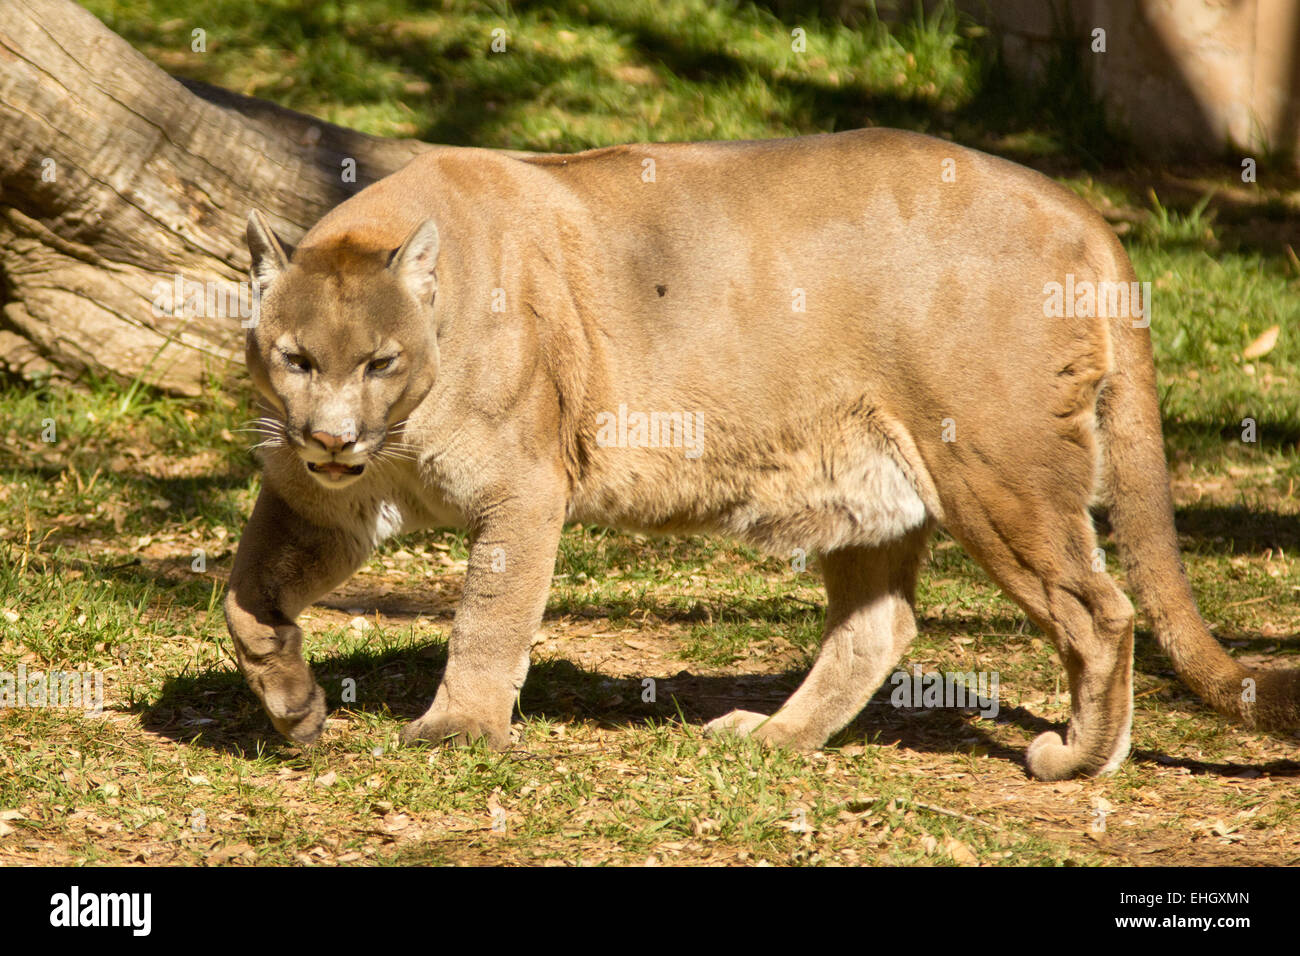 Puma, Cougar or Mountain Lion Stock Photo